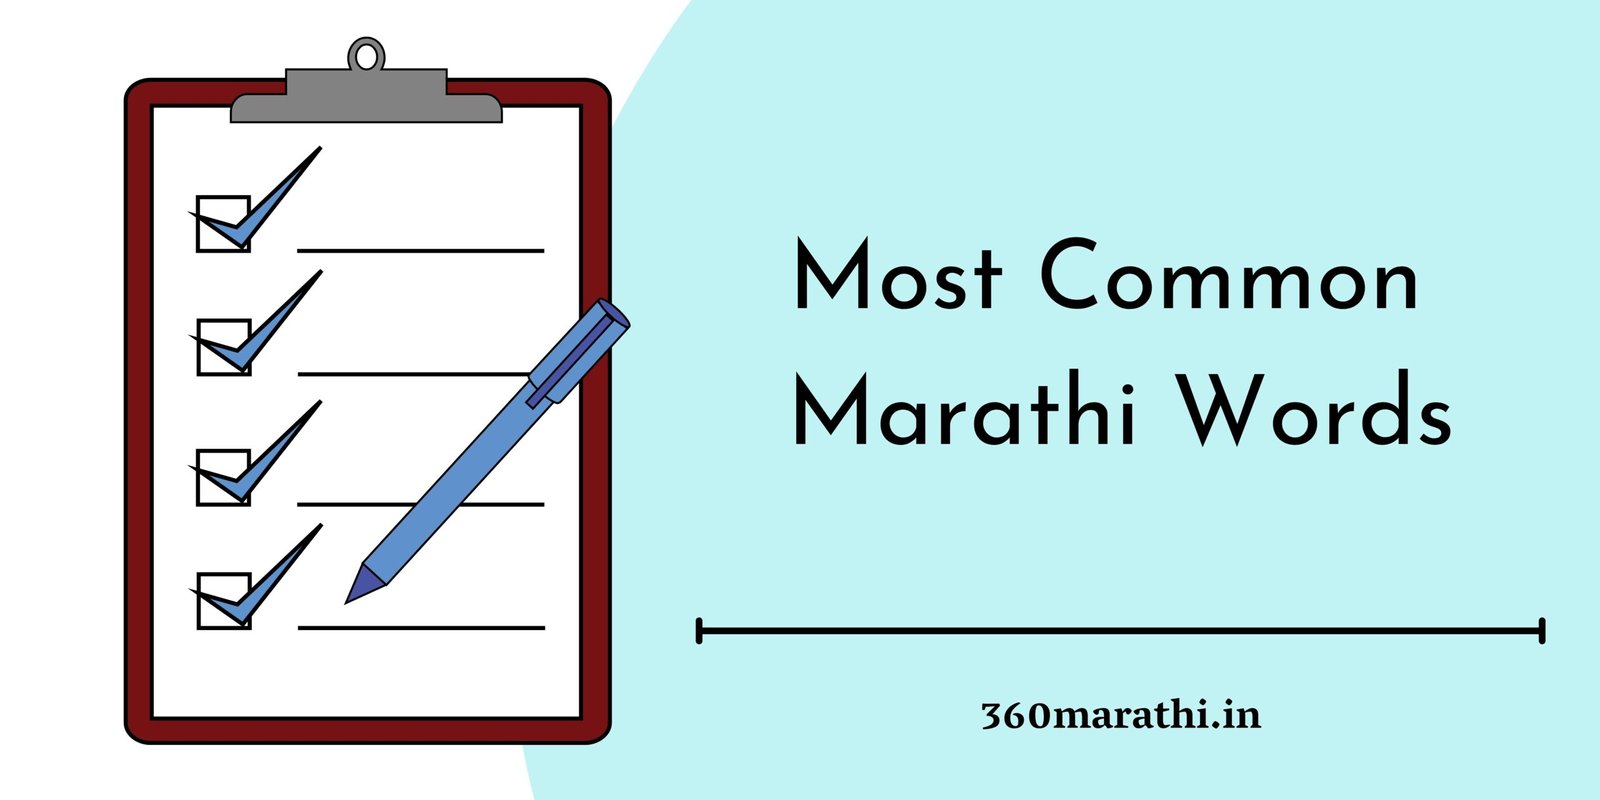 Most Common Marathi Words